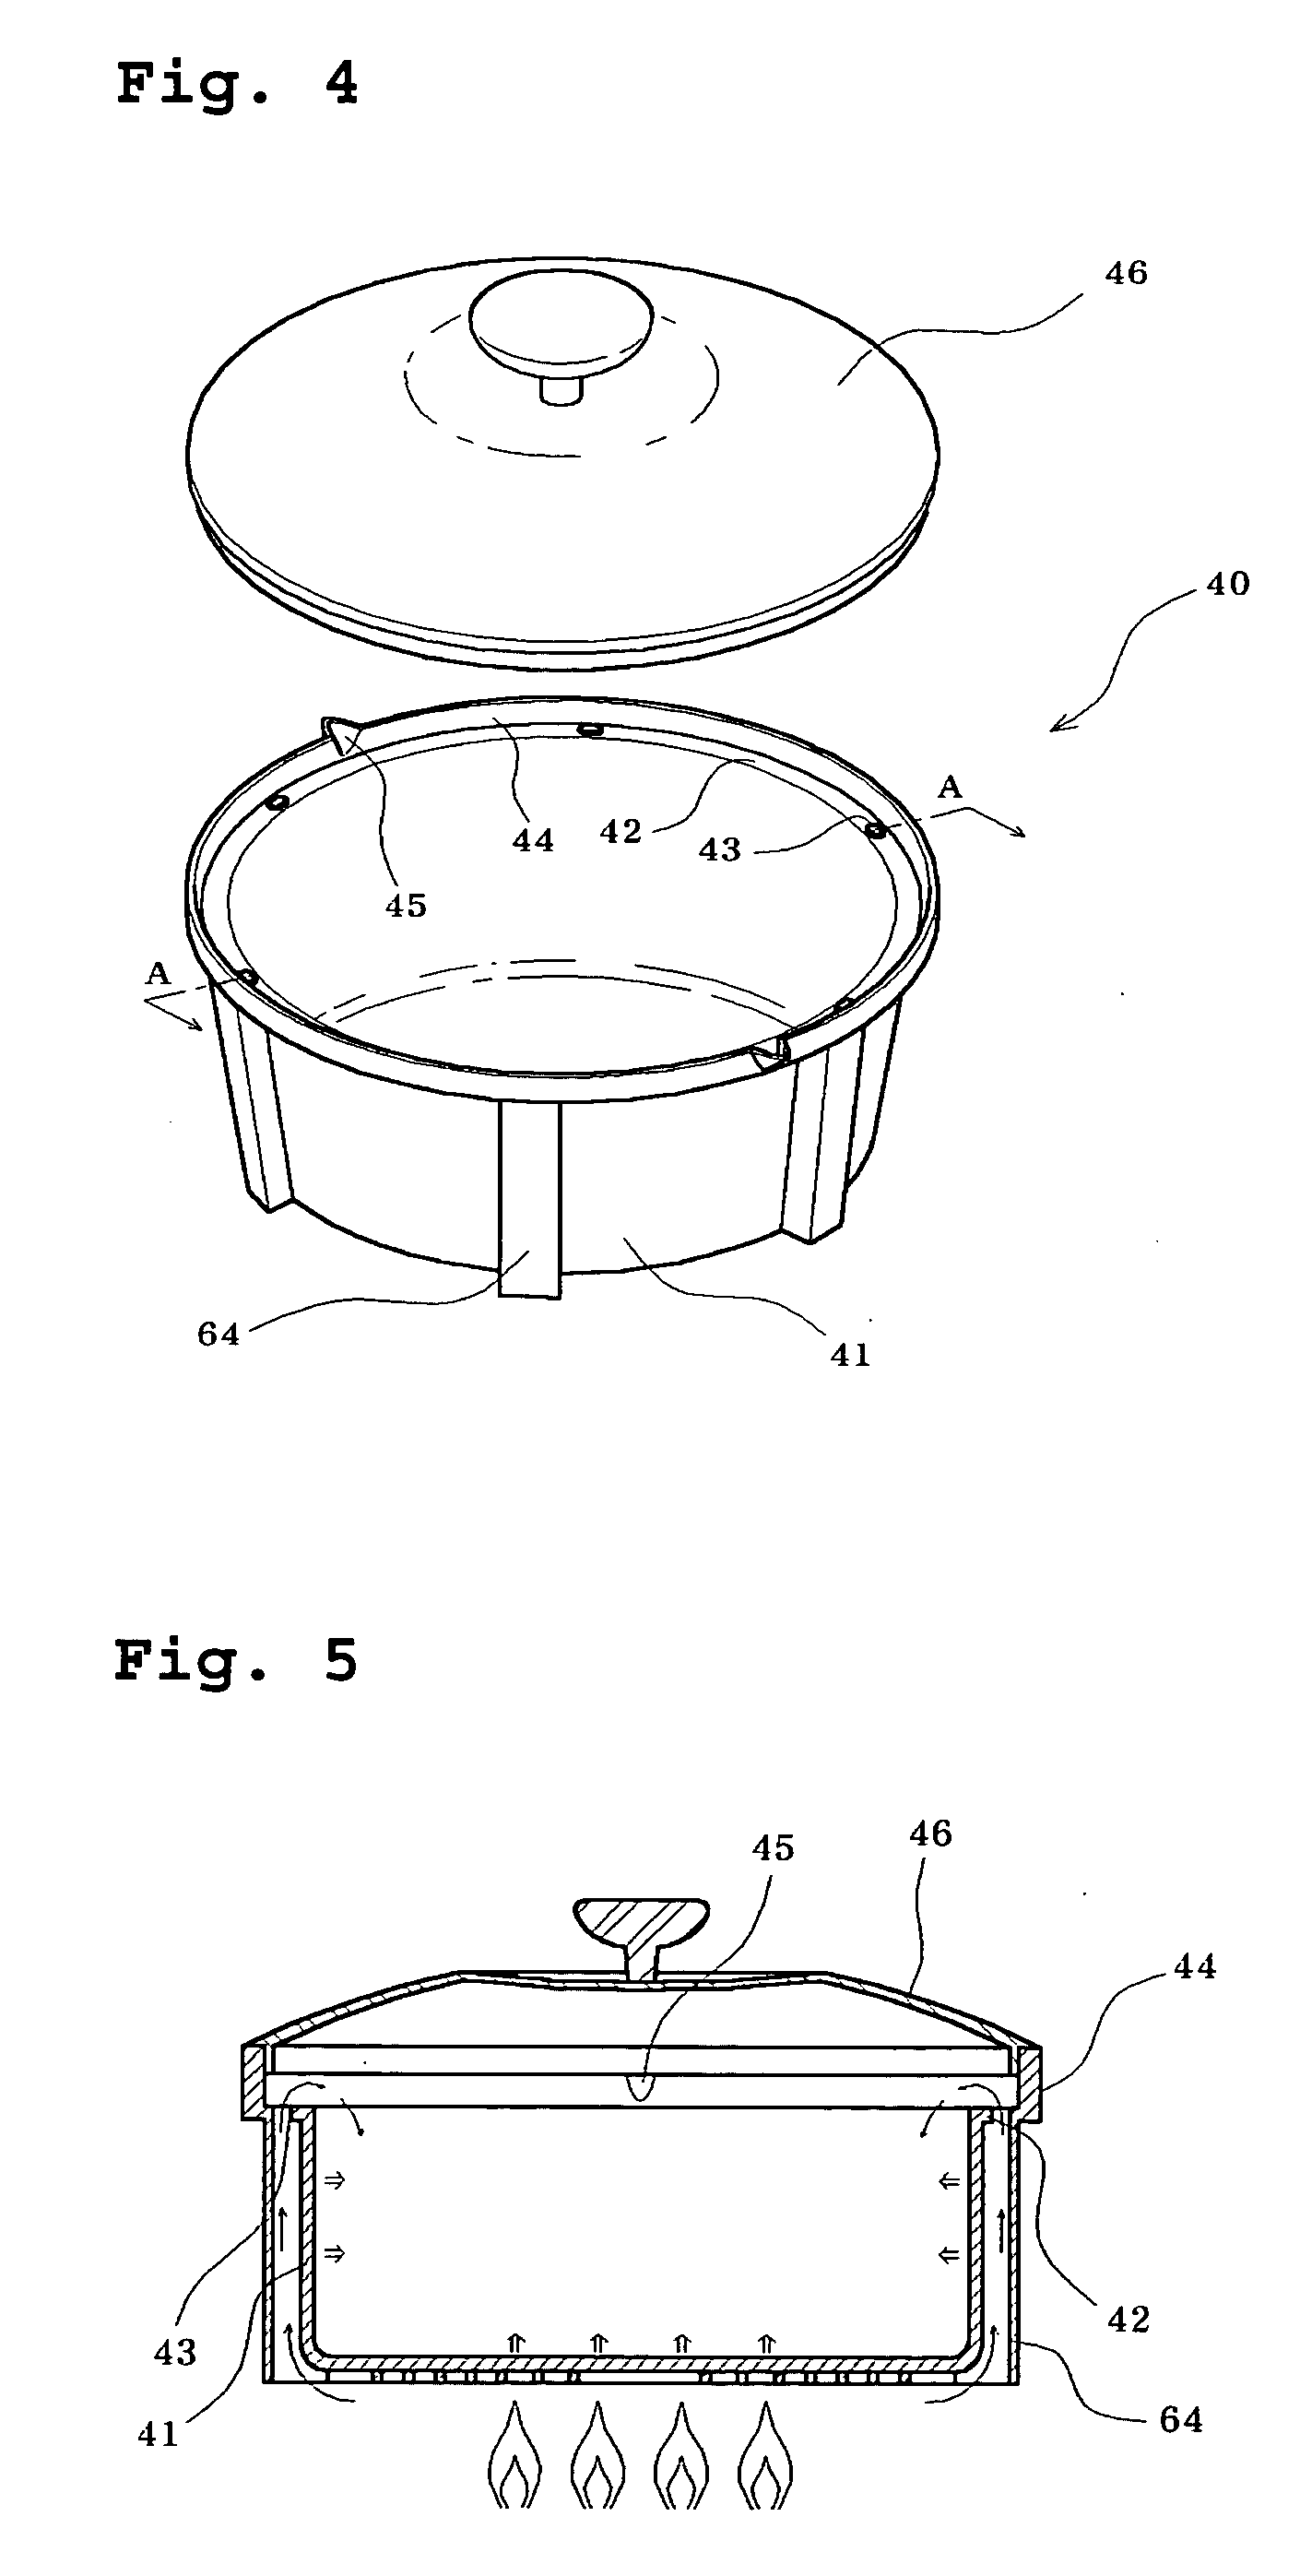 Double heating-type pots